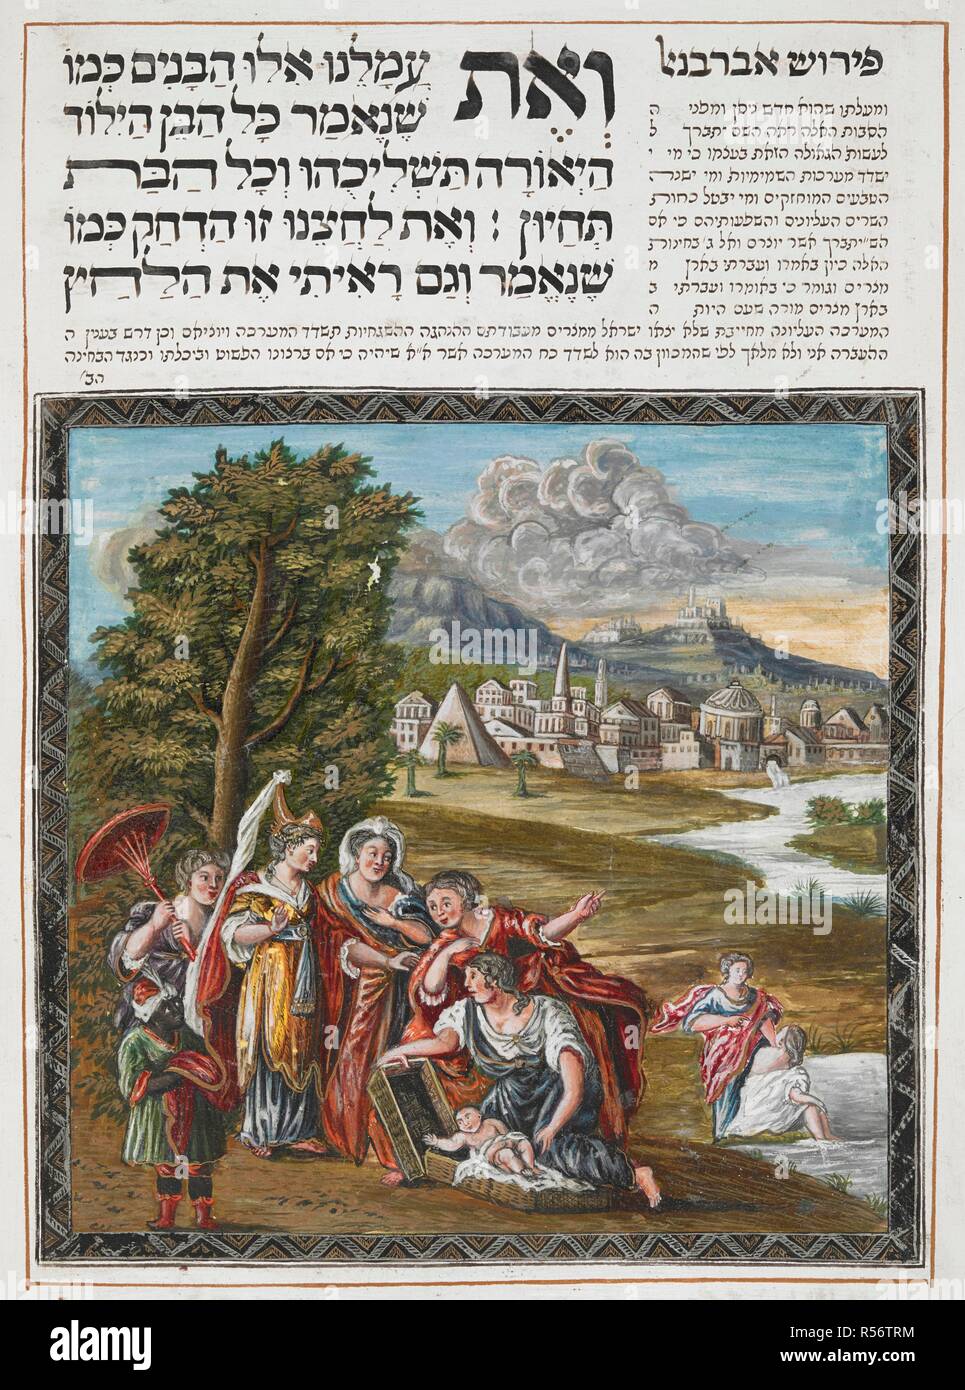 The finding of baby Moses. Leipnik Haggadah. Altona,Denmark, 1740. Source: Sloane 3173, f.12v. Language: Hebrew. Author: Joseph ben David of Leipnik. (SCRIBE). Stock Photo